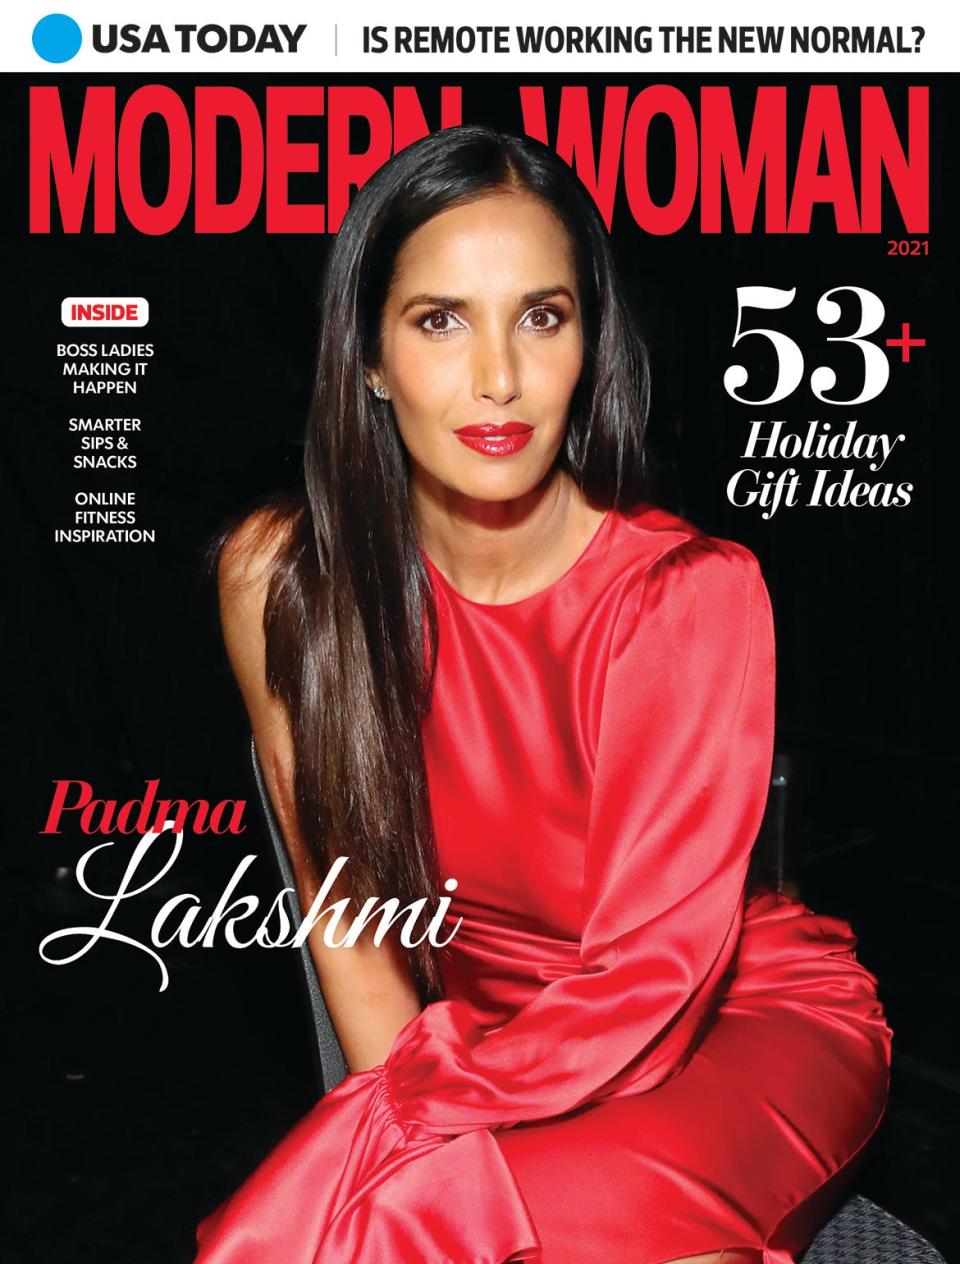 USA TODAY's Modern Woman Magazine